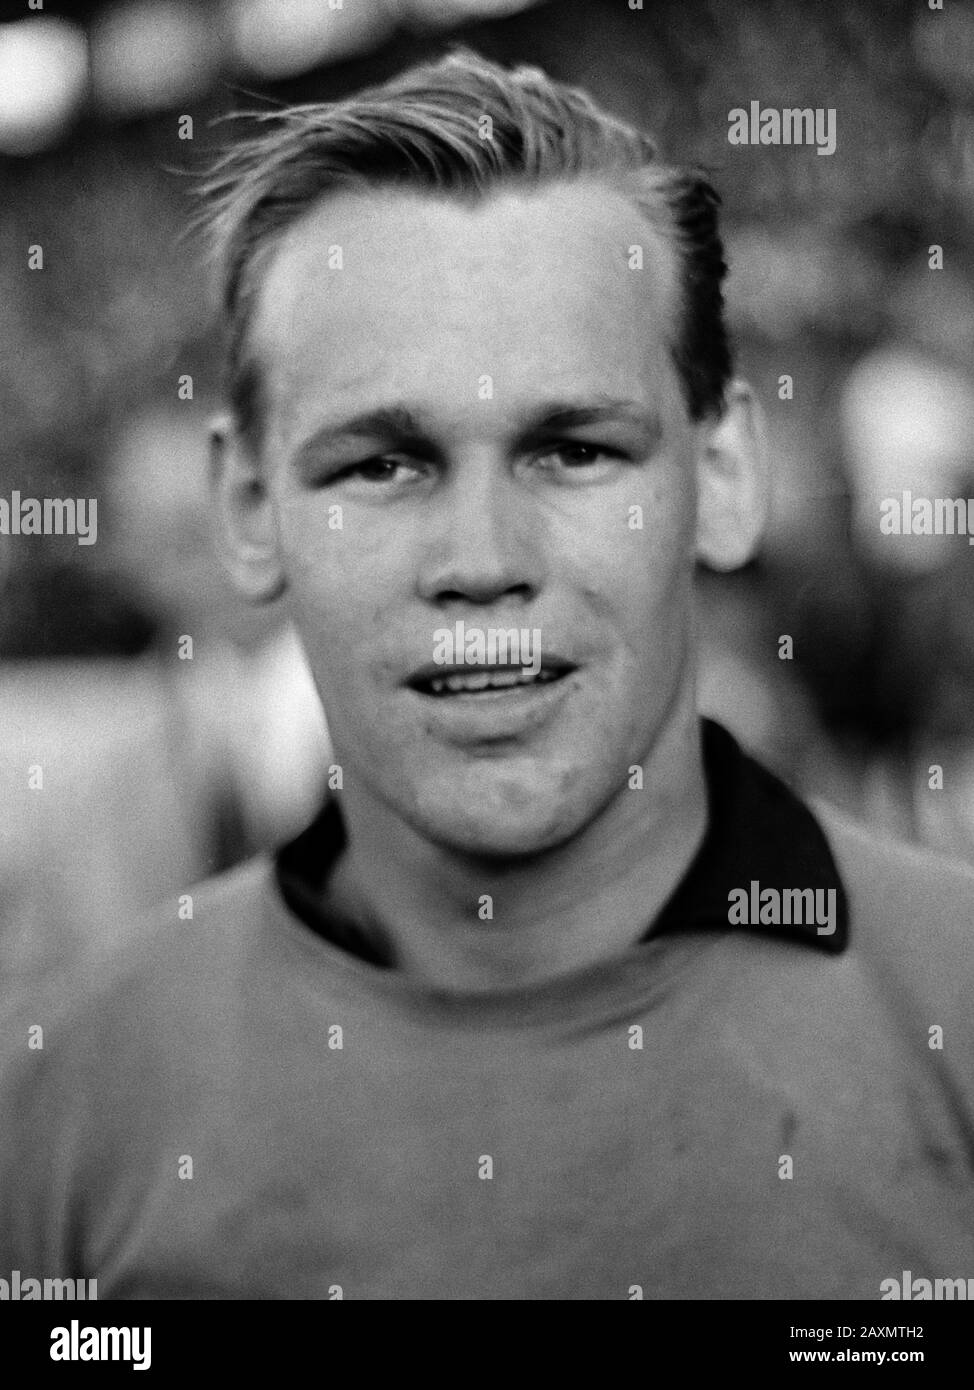 Coppa finale contro Ajax 2-1 NAC, Peter van de Merwe (capo) di NAC 7 giugno 1967 Foto Stock